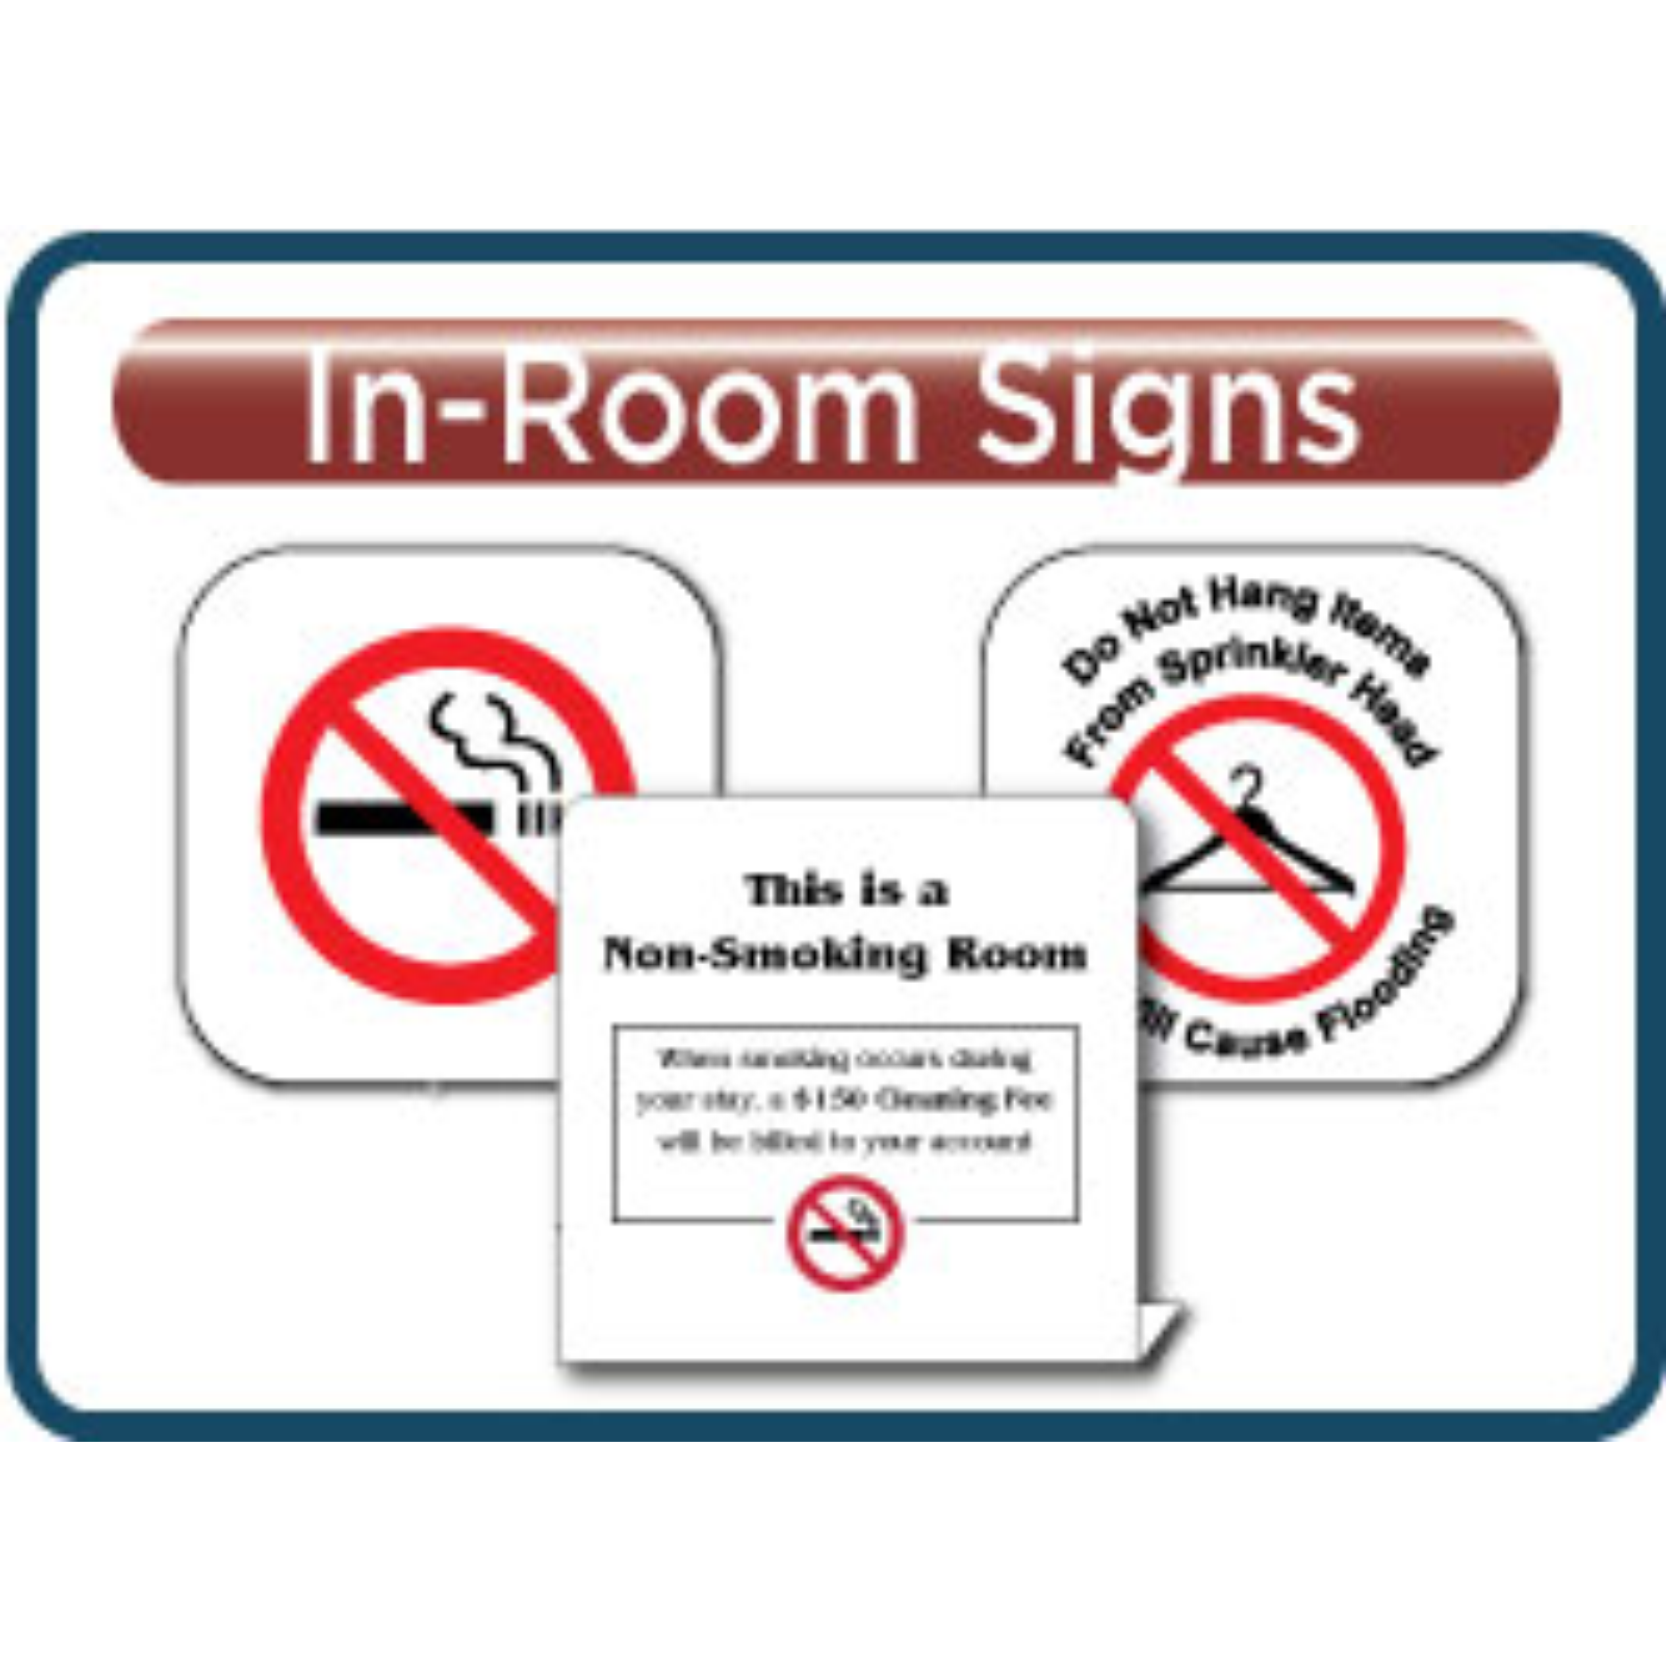 AmericInn 2021 - In Room Signs